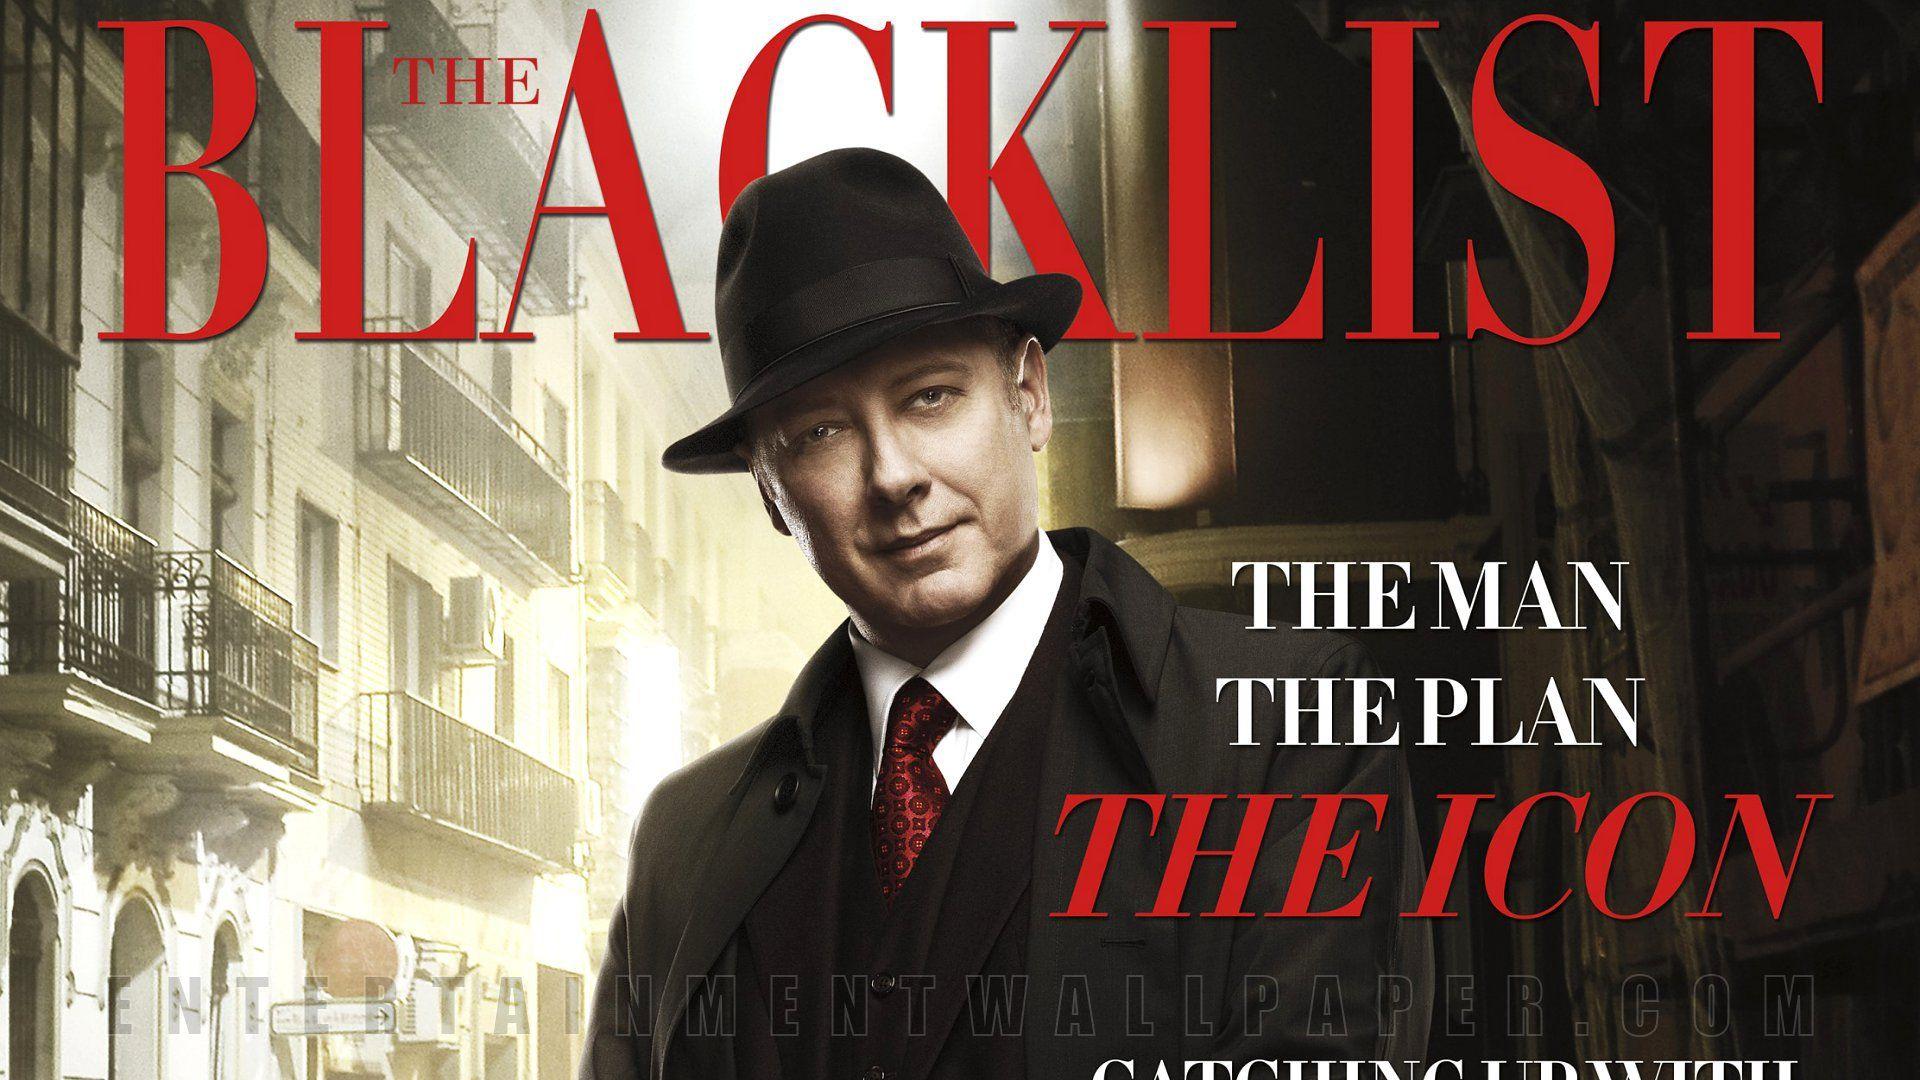 The Blacklist TV series wallpaper HD free Download